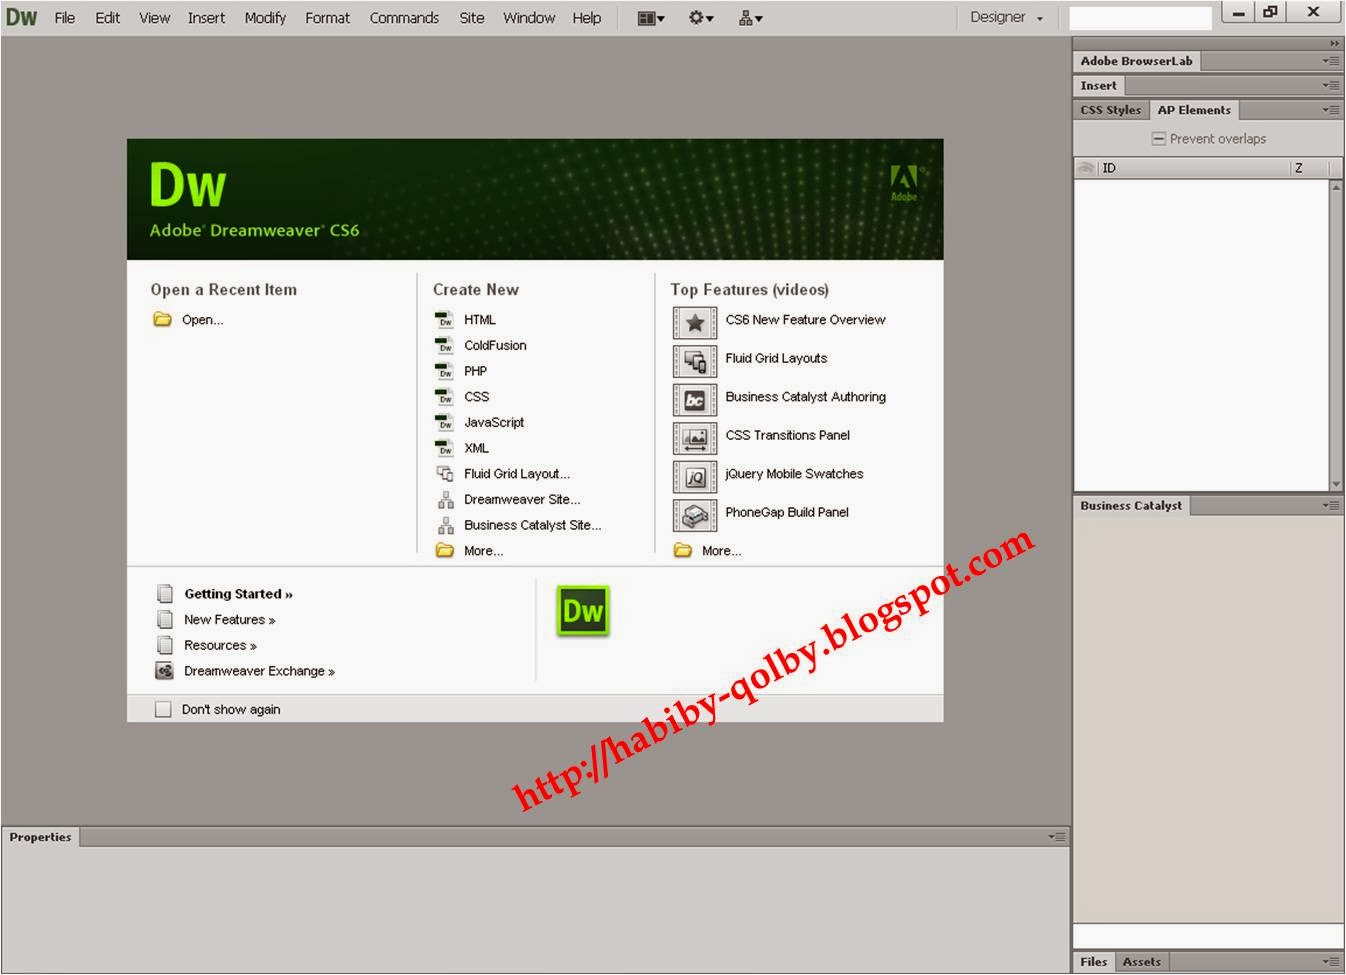 Adobe Dreamweaver Cs6 12.1 Build 5949